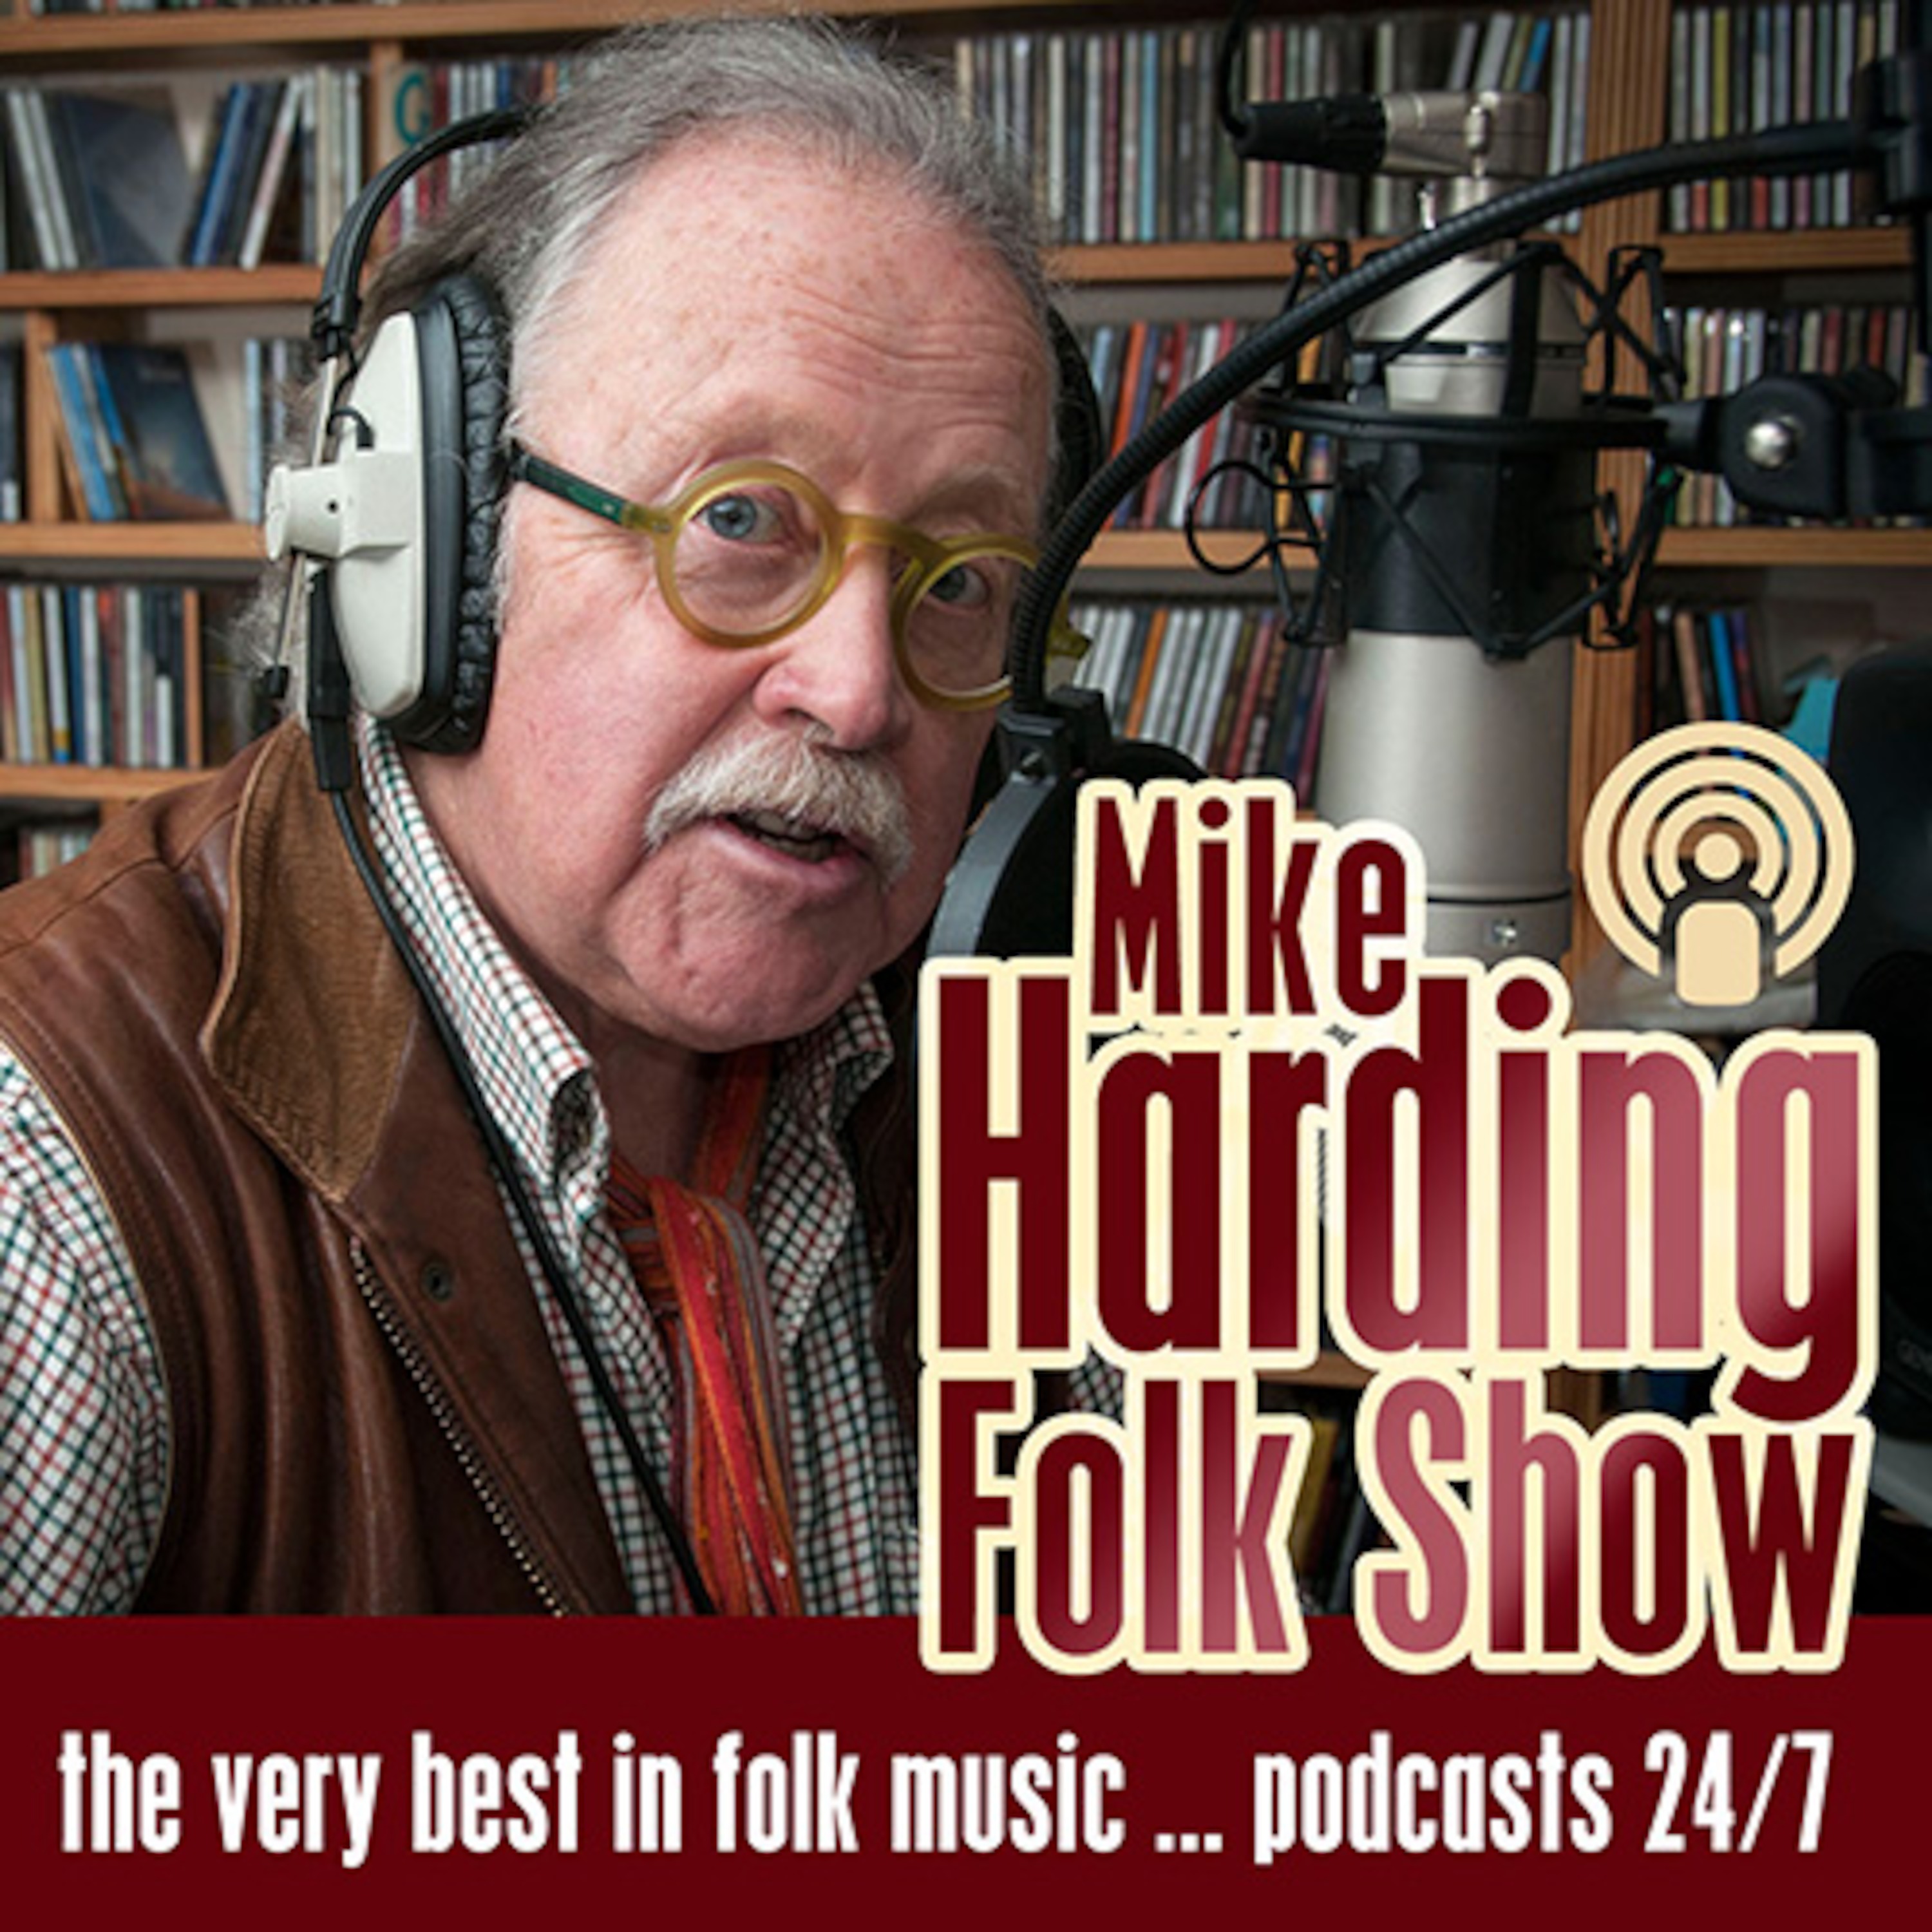 Mike Harding Folk Show 57